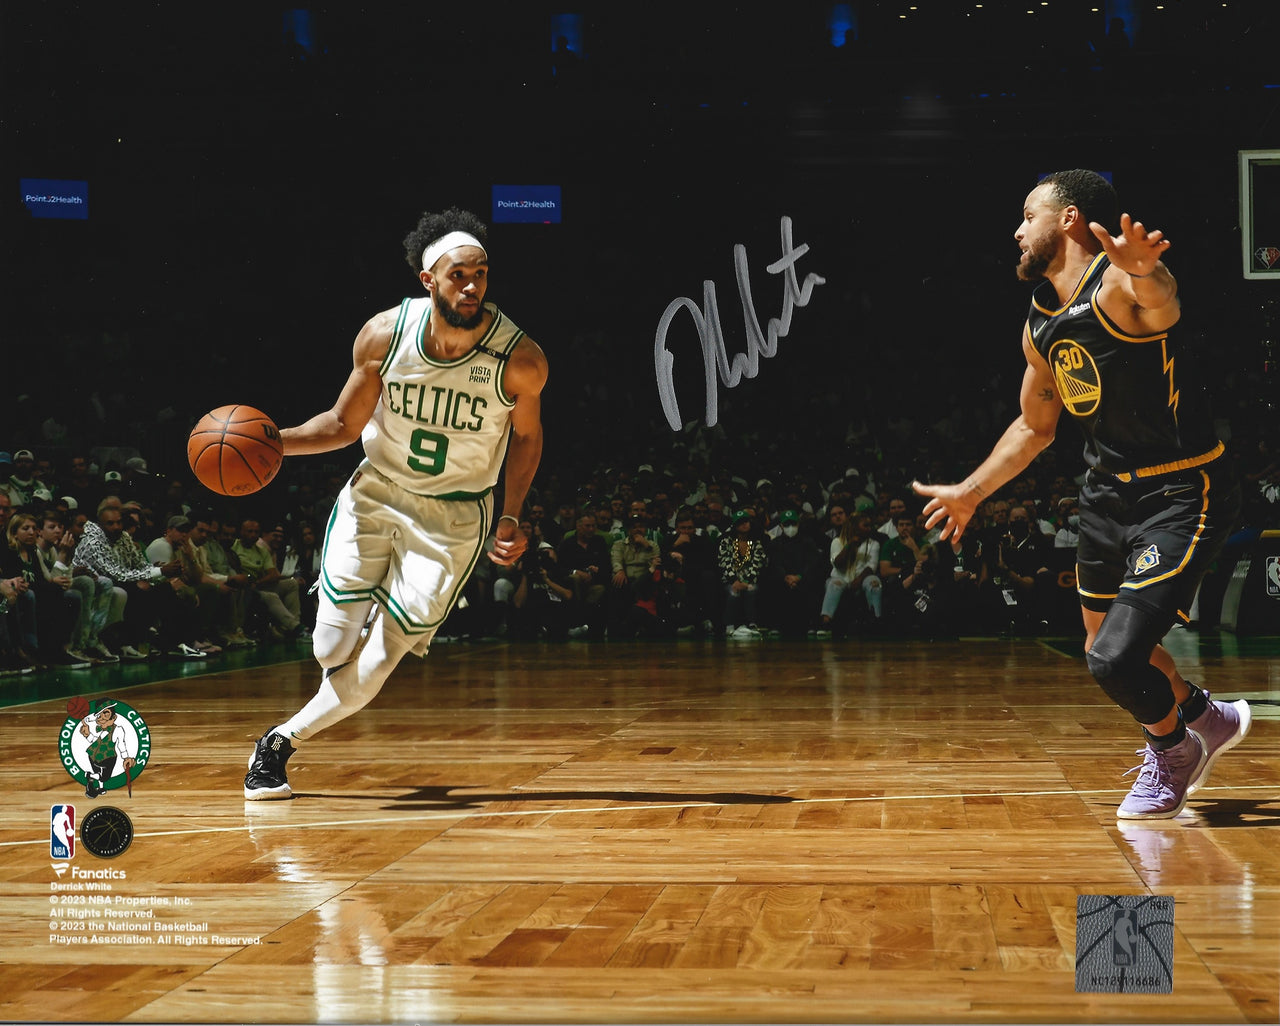 Derrick White v. Steph Curry Boston Celtics Autographed Basketball Photo - Dynasty Sports & Framing 